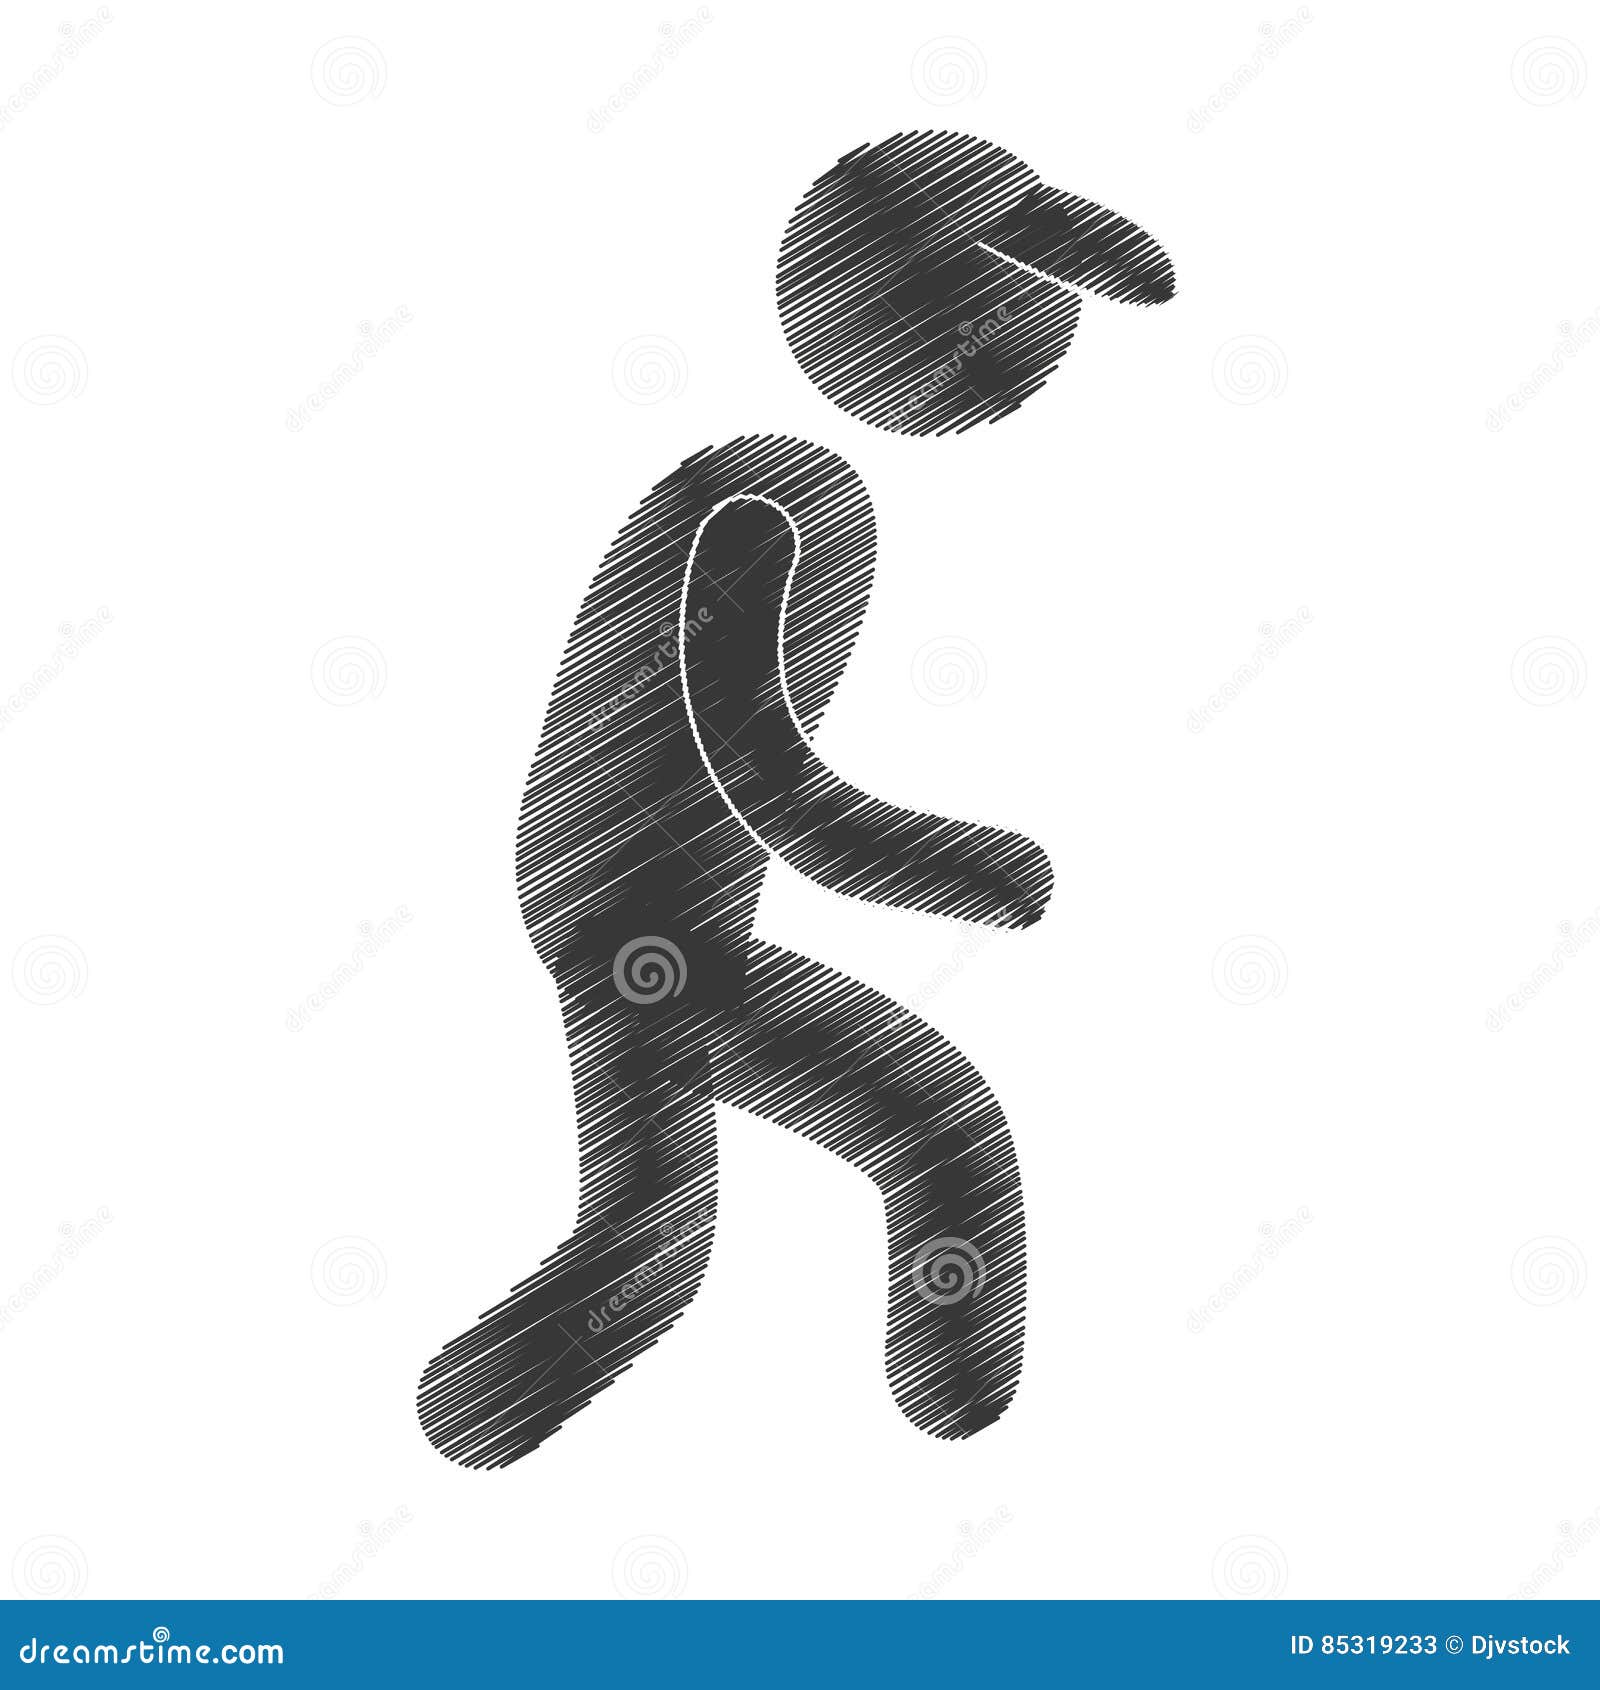 Drawing Man Walking with Cap Figure Pictogram Stock Illustration ...